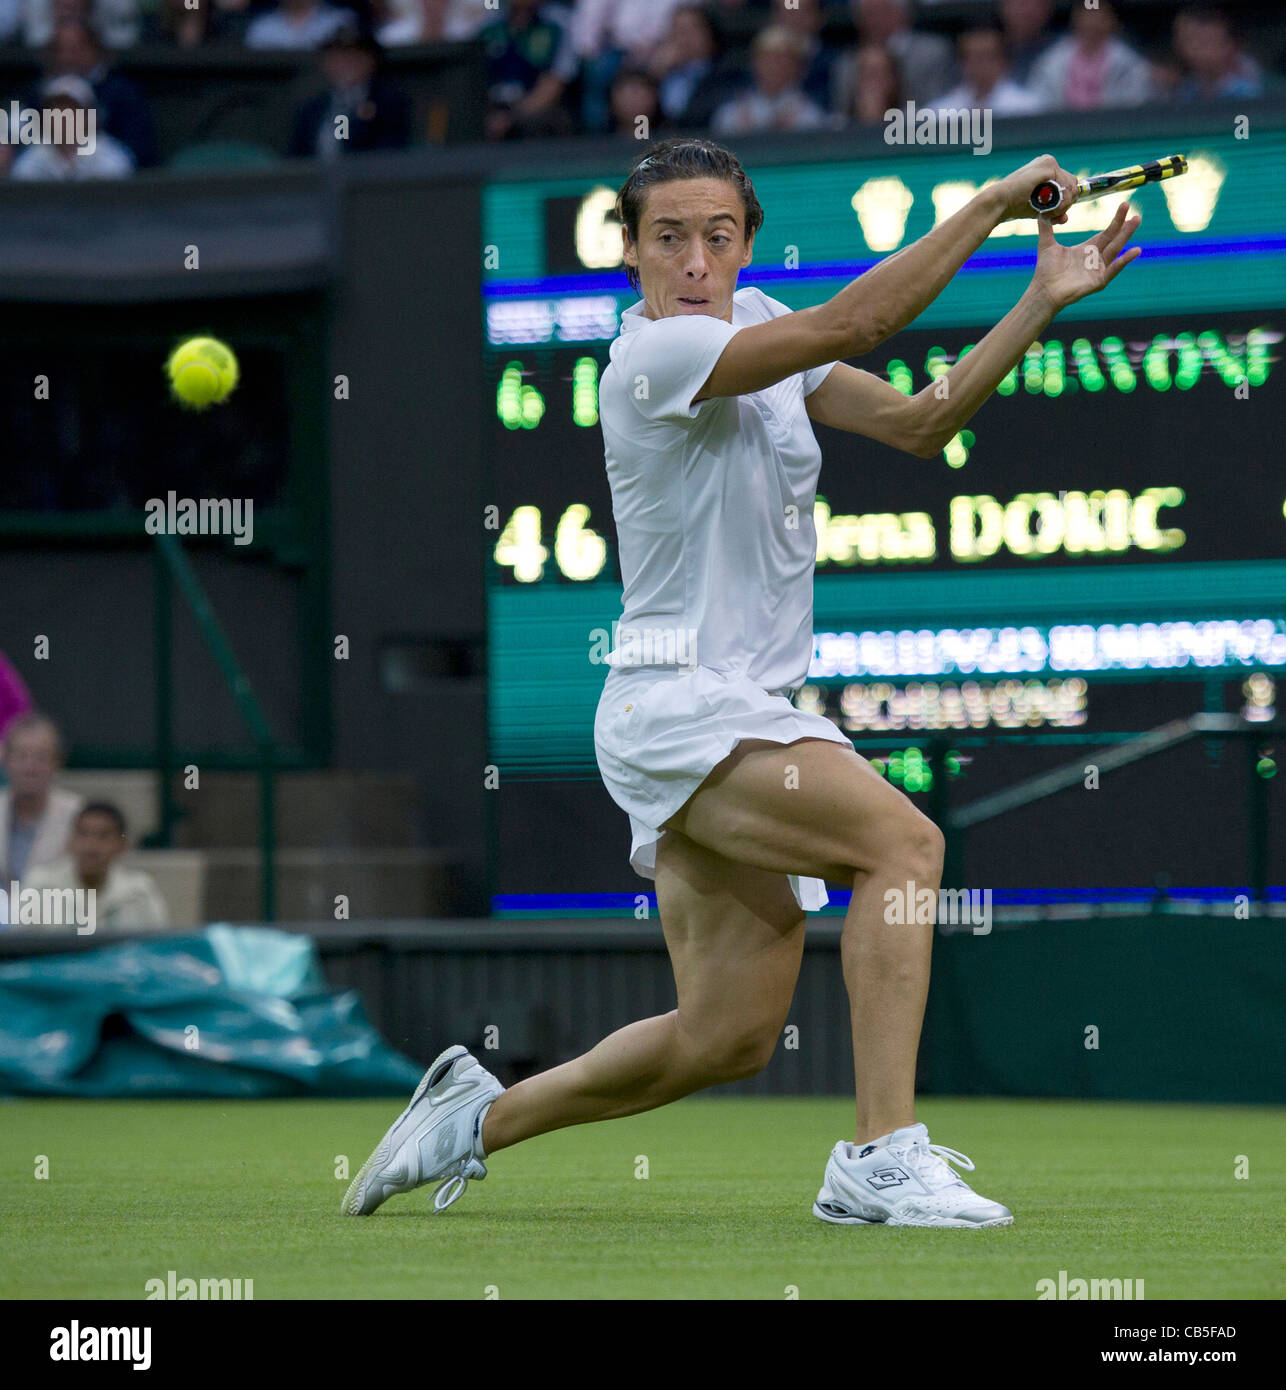 20.06.2011. Francesca Schiavone v Jelena Dokic. Francesca Schiavone in action. The Wimbledon Tennis Championships. Stock Photo